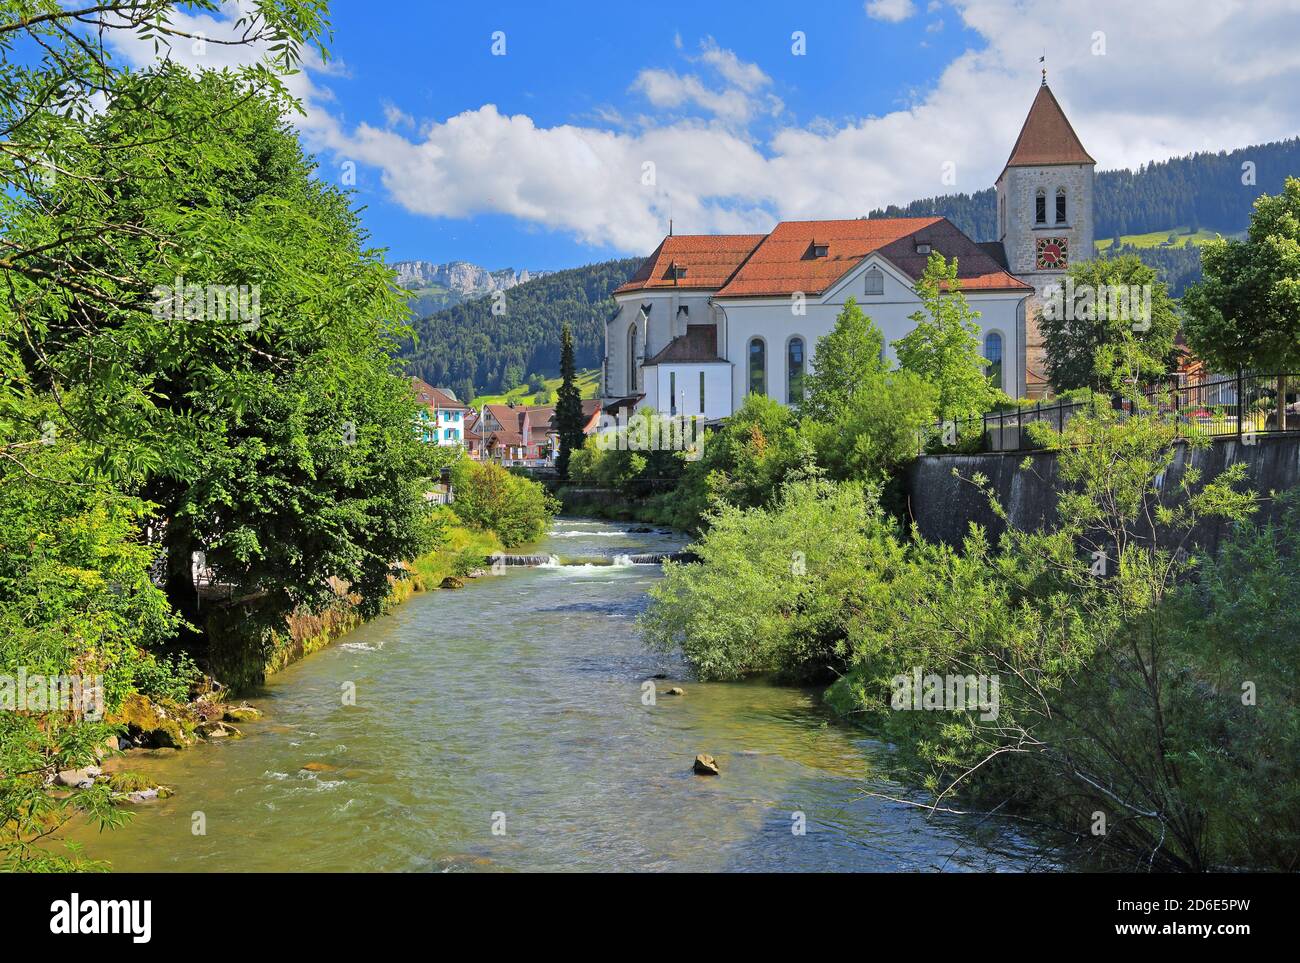 River Sitter with parish church, Appenzell, Appenzeller Land, Canton of Appenzell-Innerrhoden, Switzerland Stock Photo